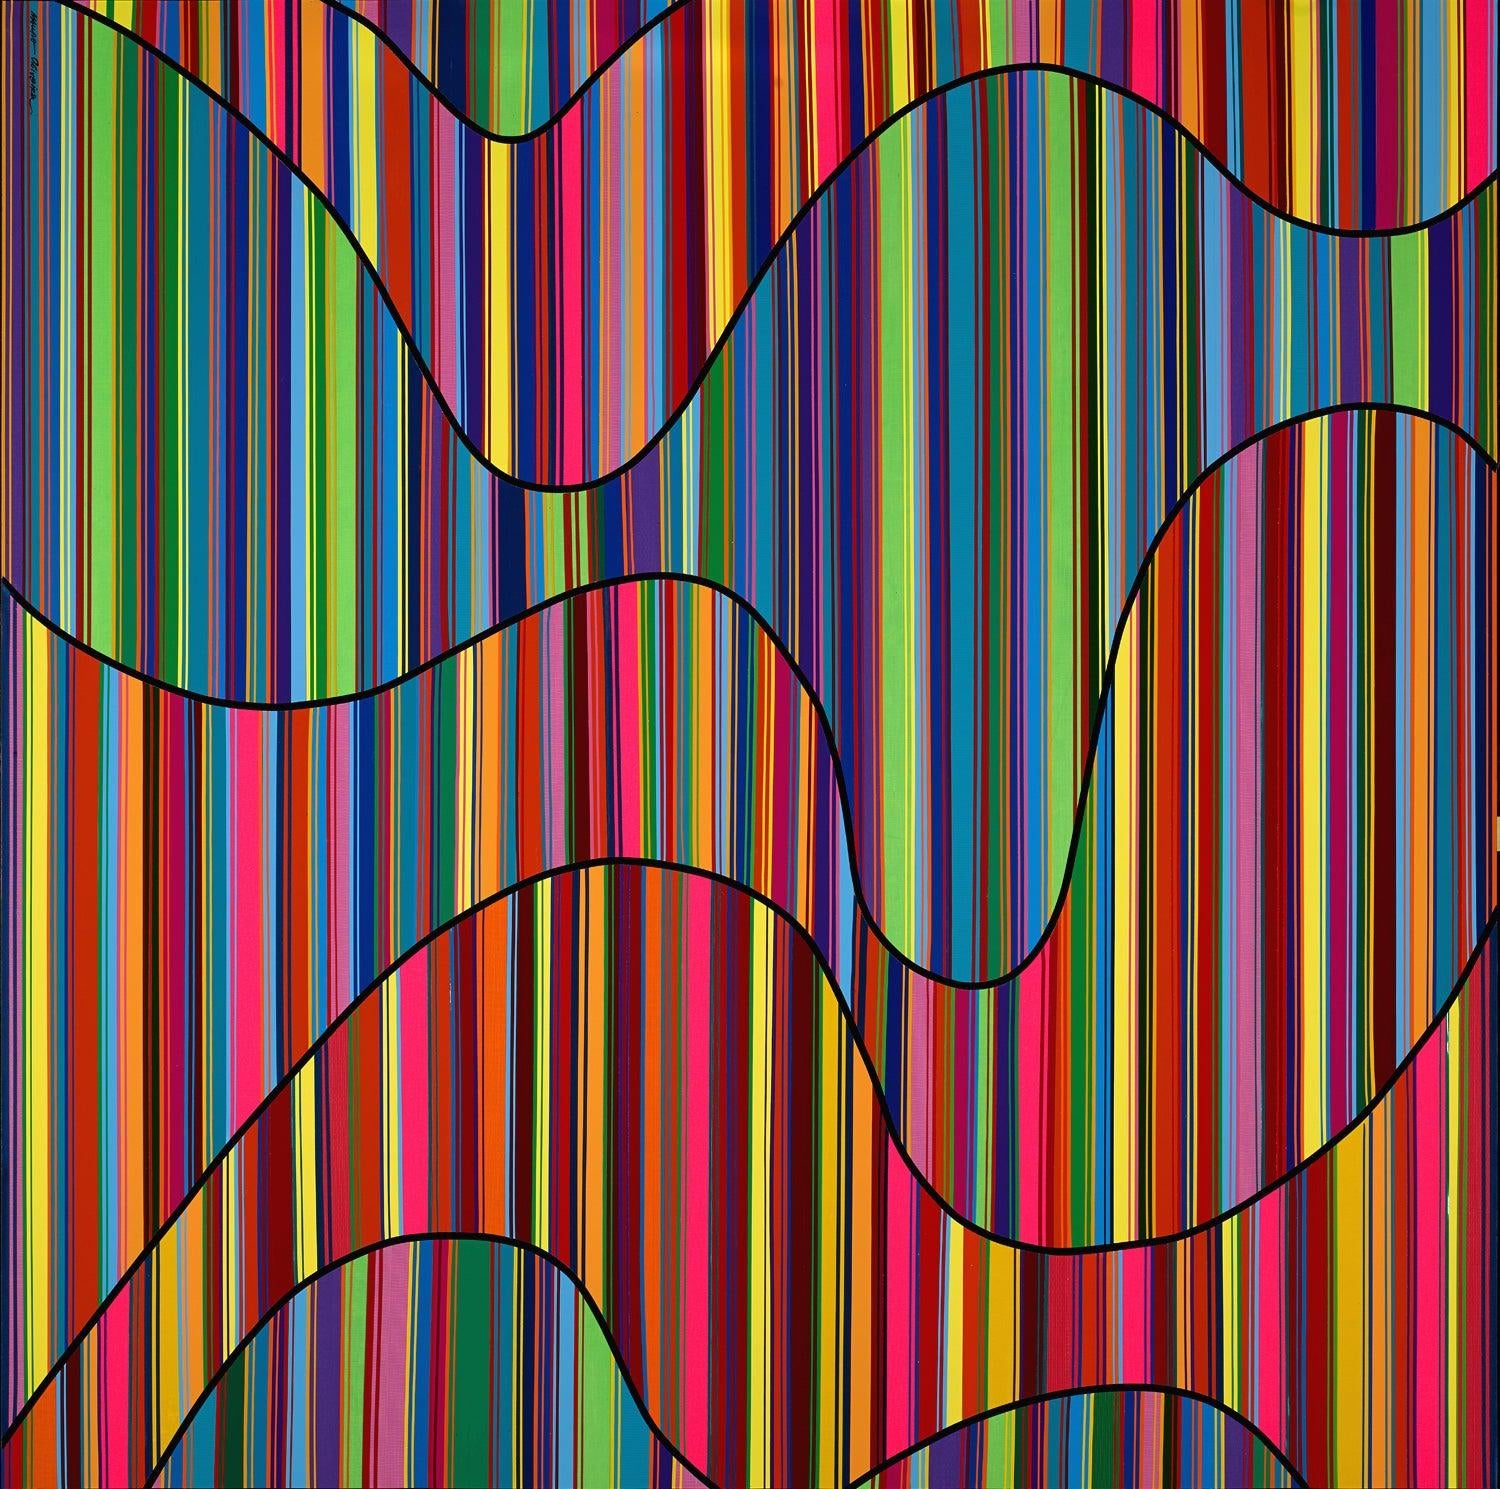 Abstract Print Mauro Oliveira - Waves arc-en-ciel II (impression en édition limitée)